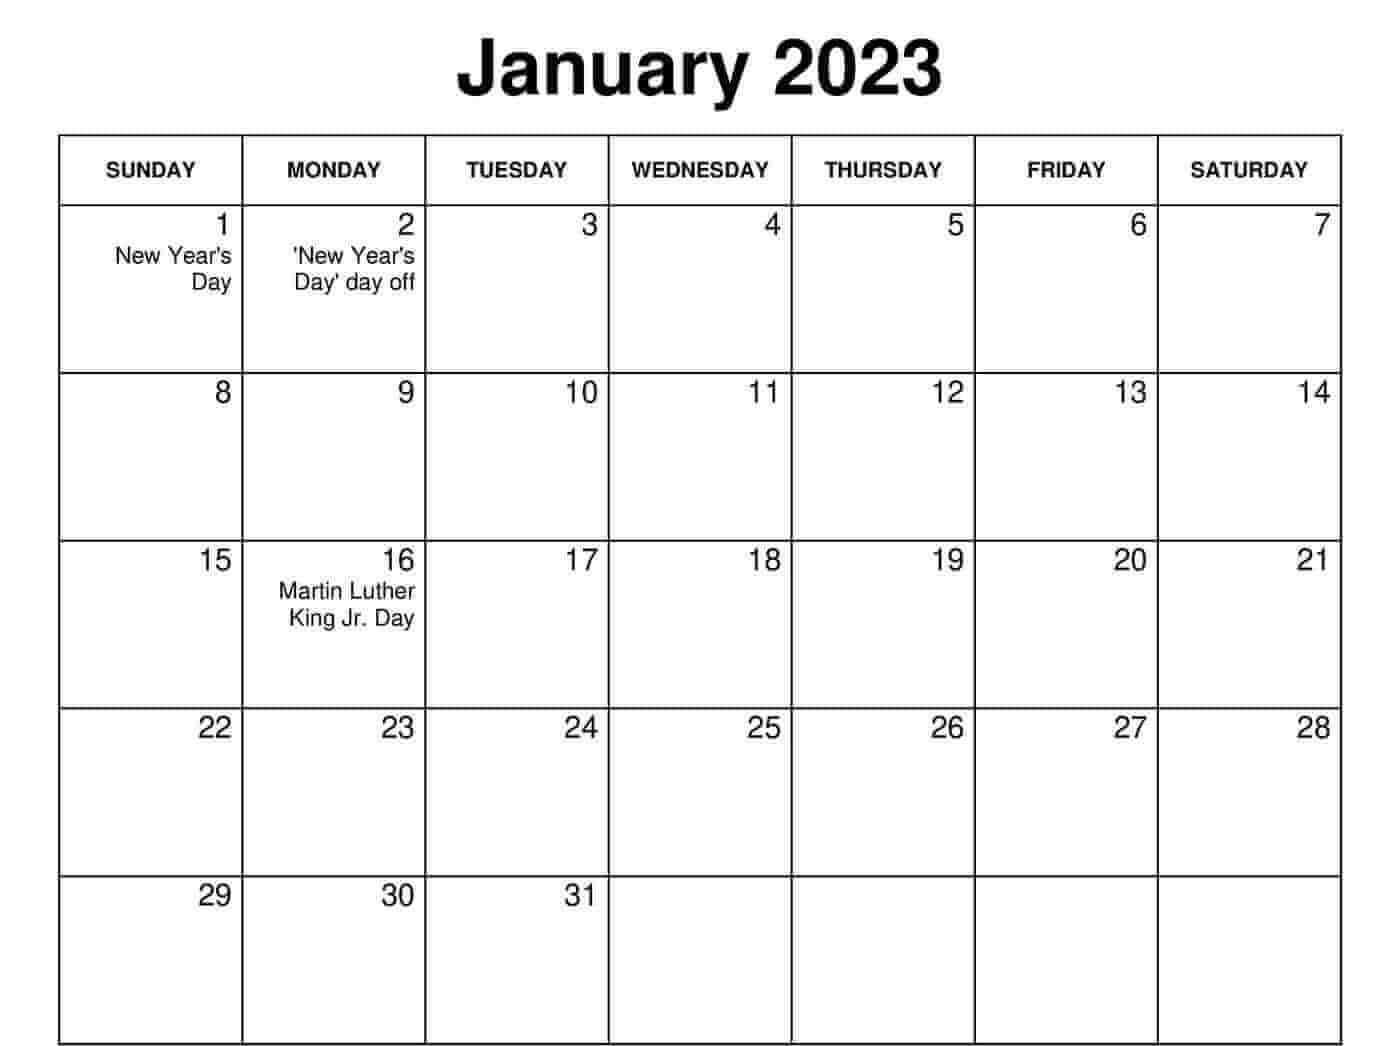 January 2023 Calendar With Holidays UK